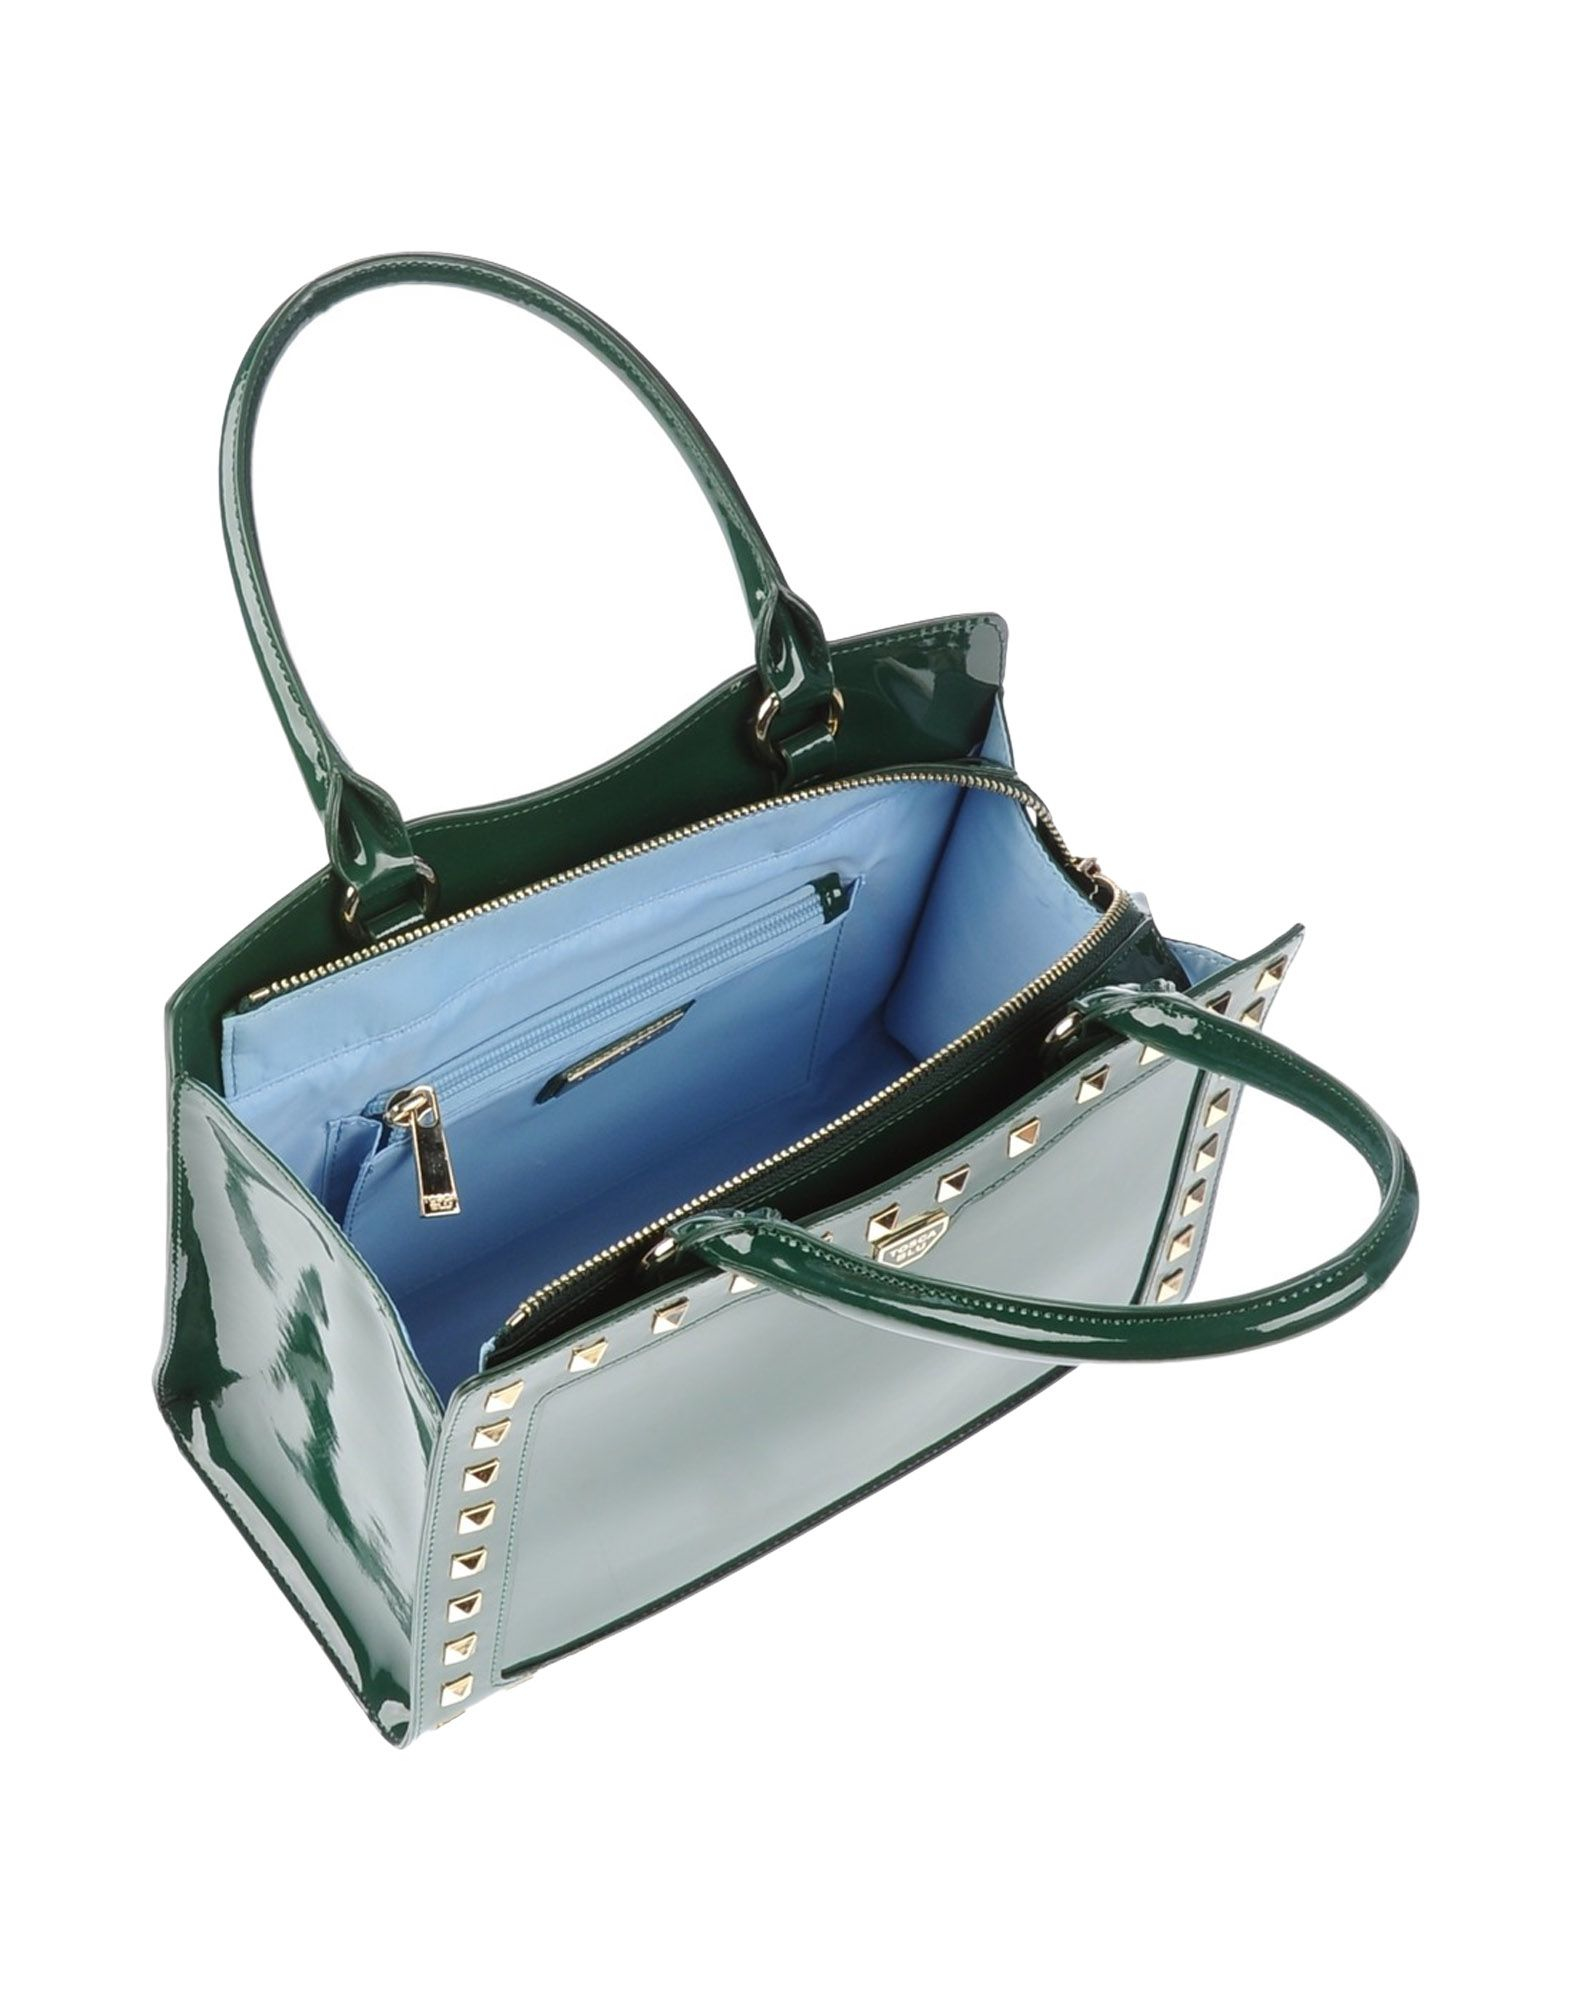  Tosca  Blu Handbag in Emerald Green  Green  Lyst